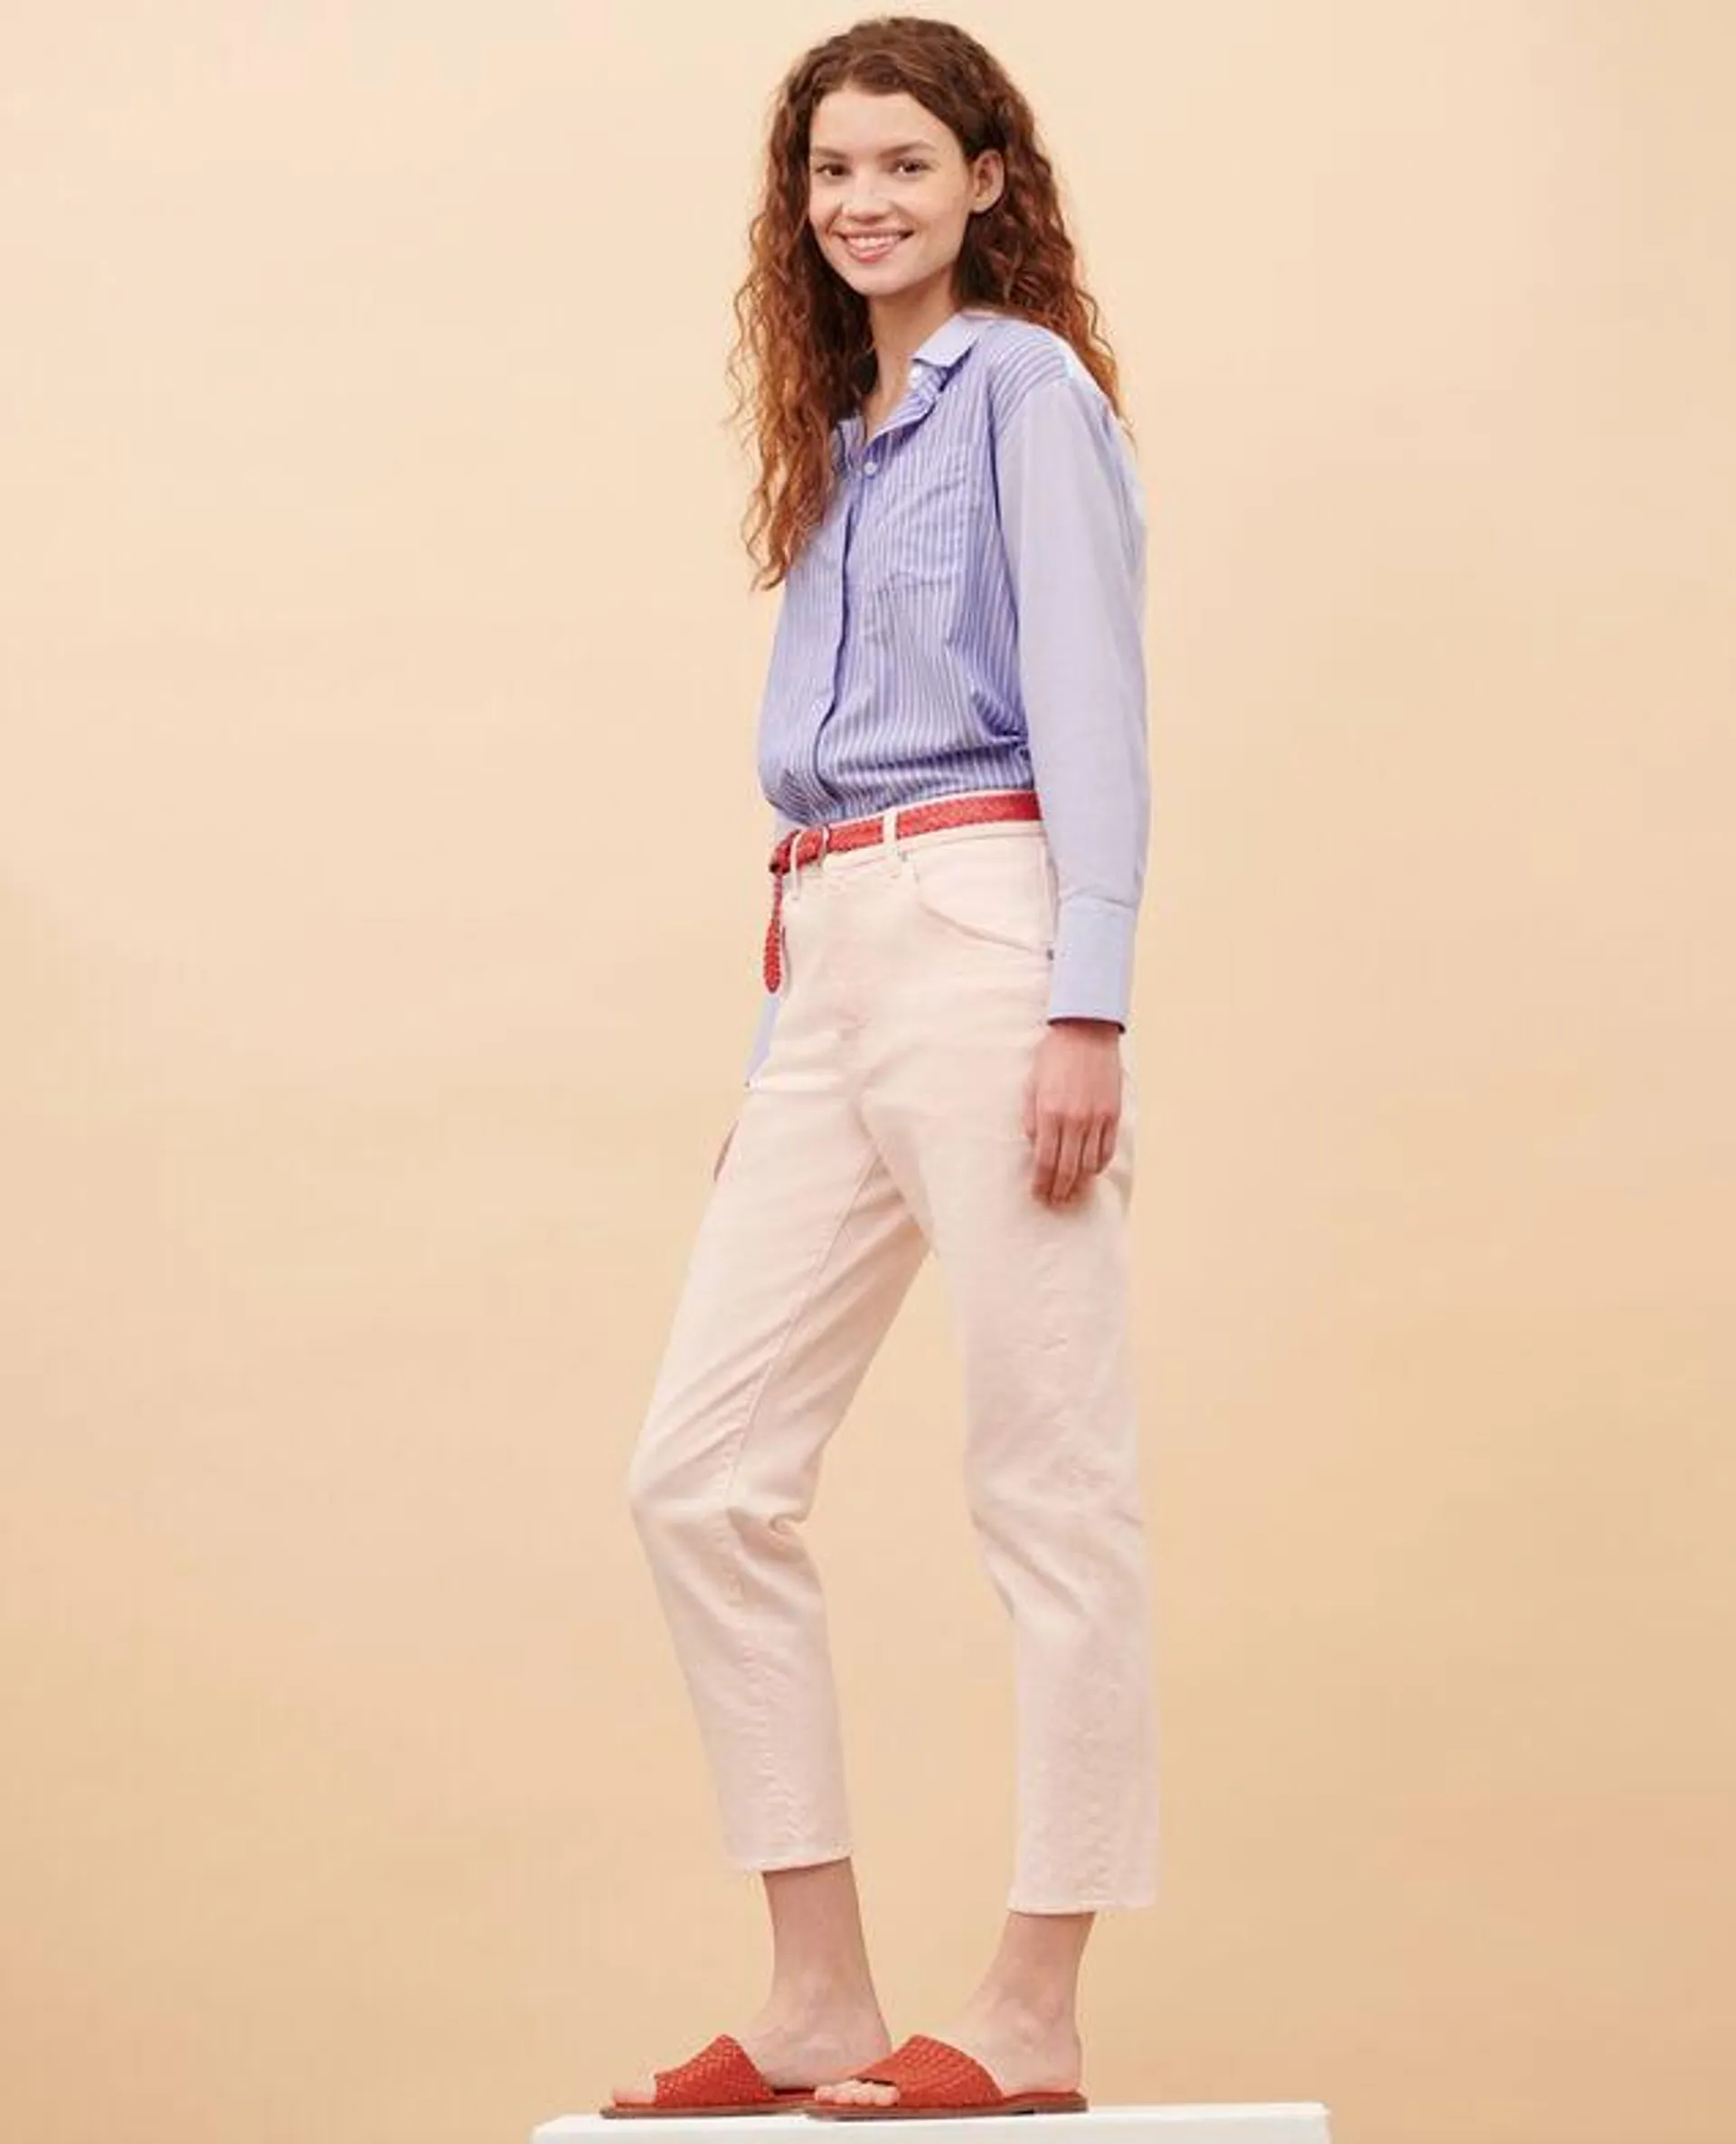 RITA - SLOUCHY - Jeans amplios de algodón pink marshmallow